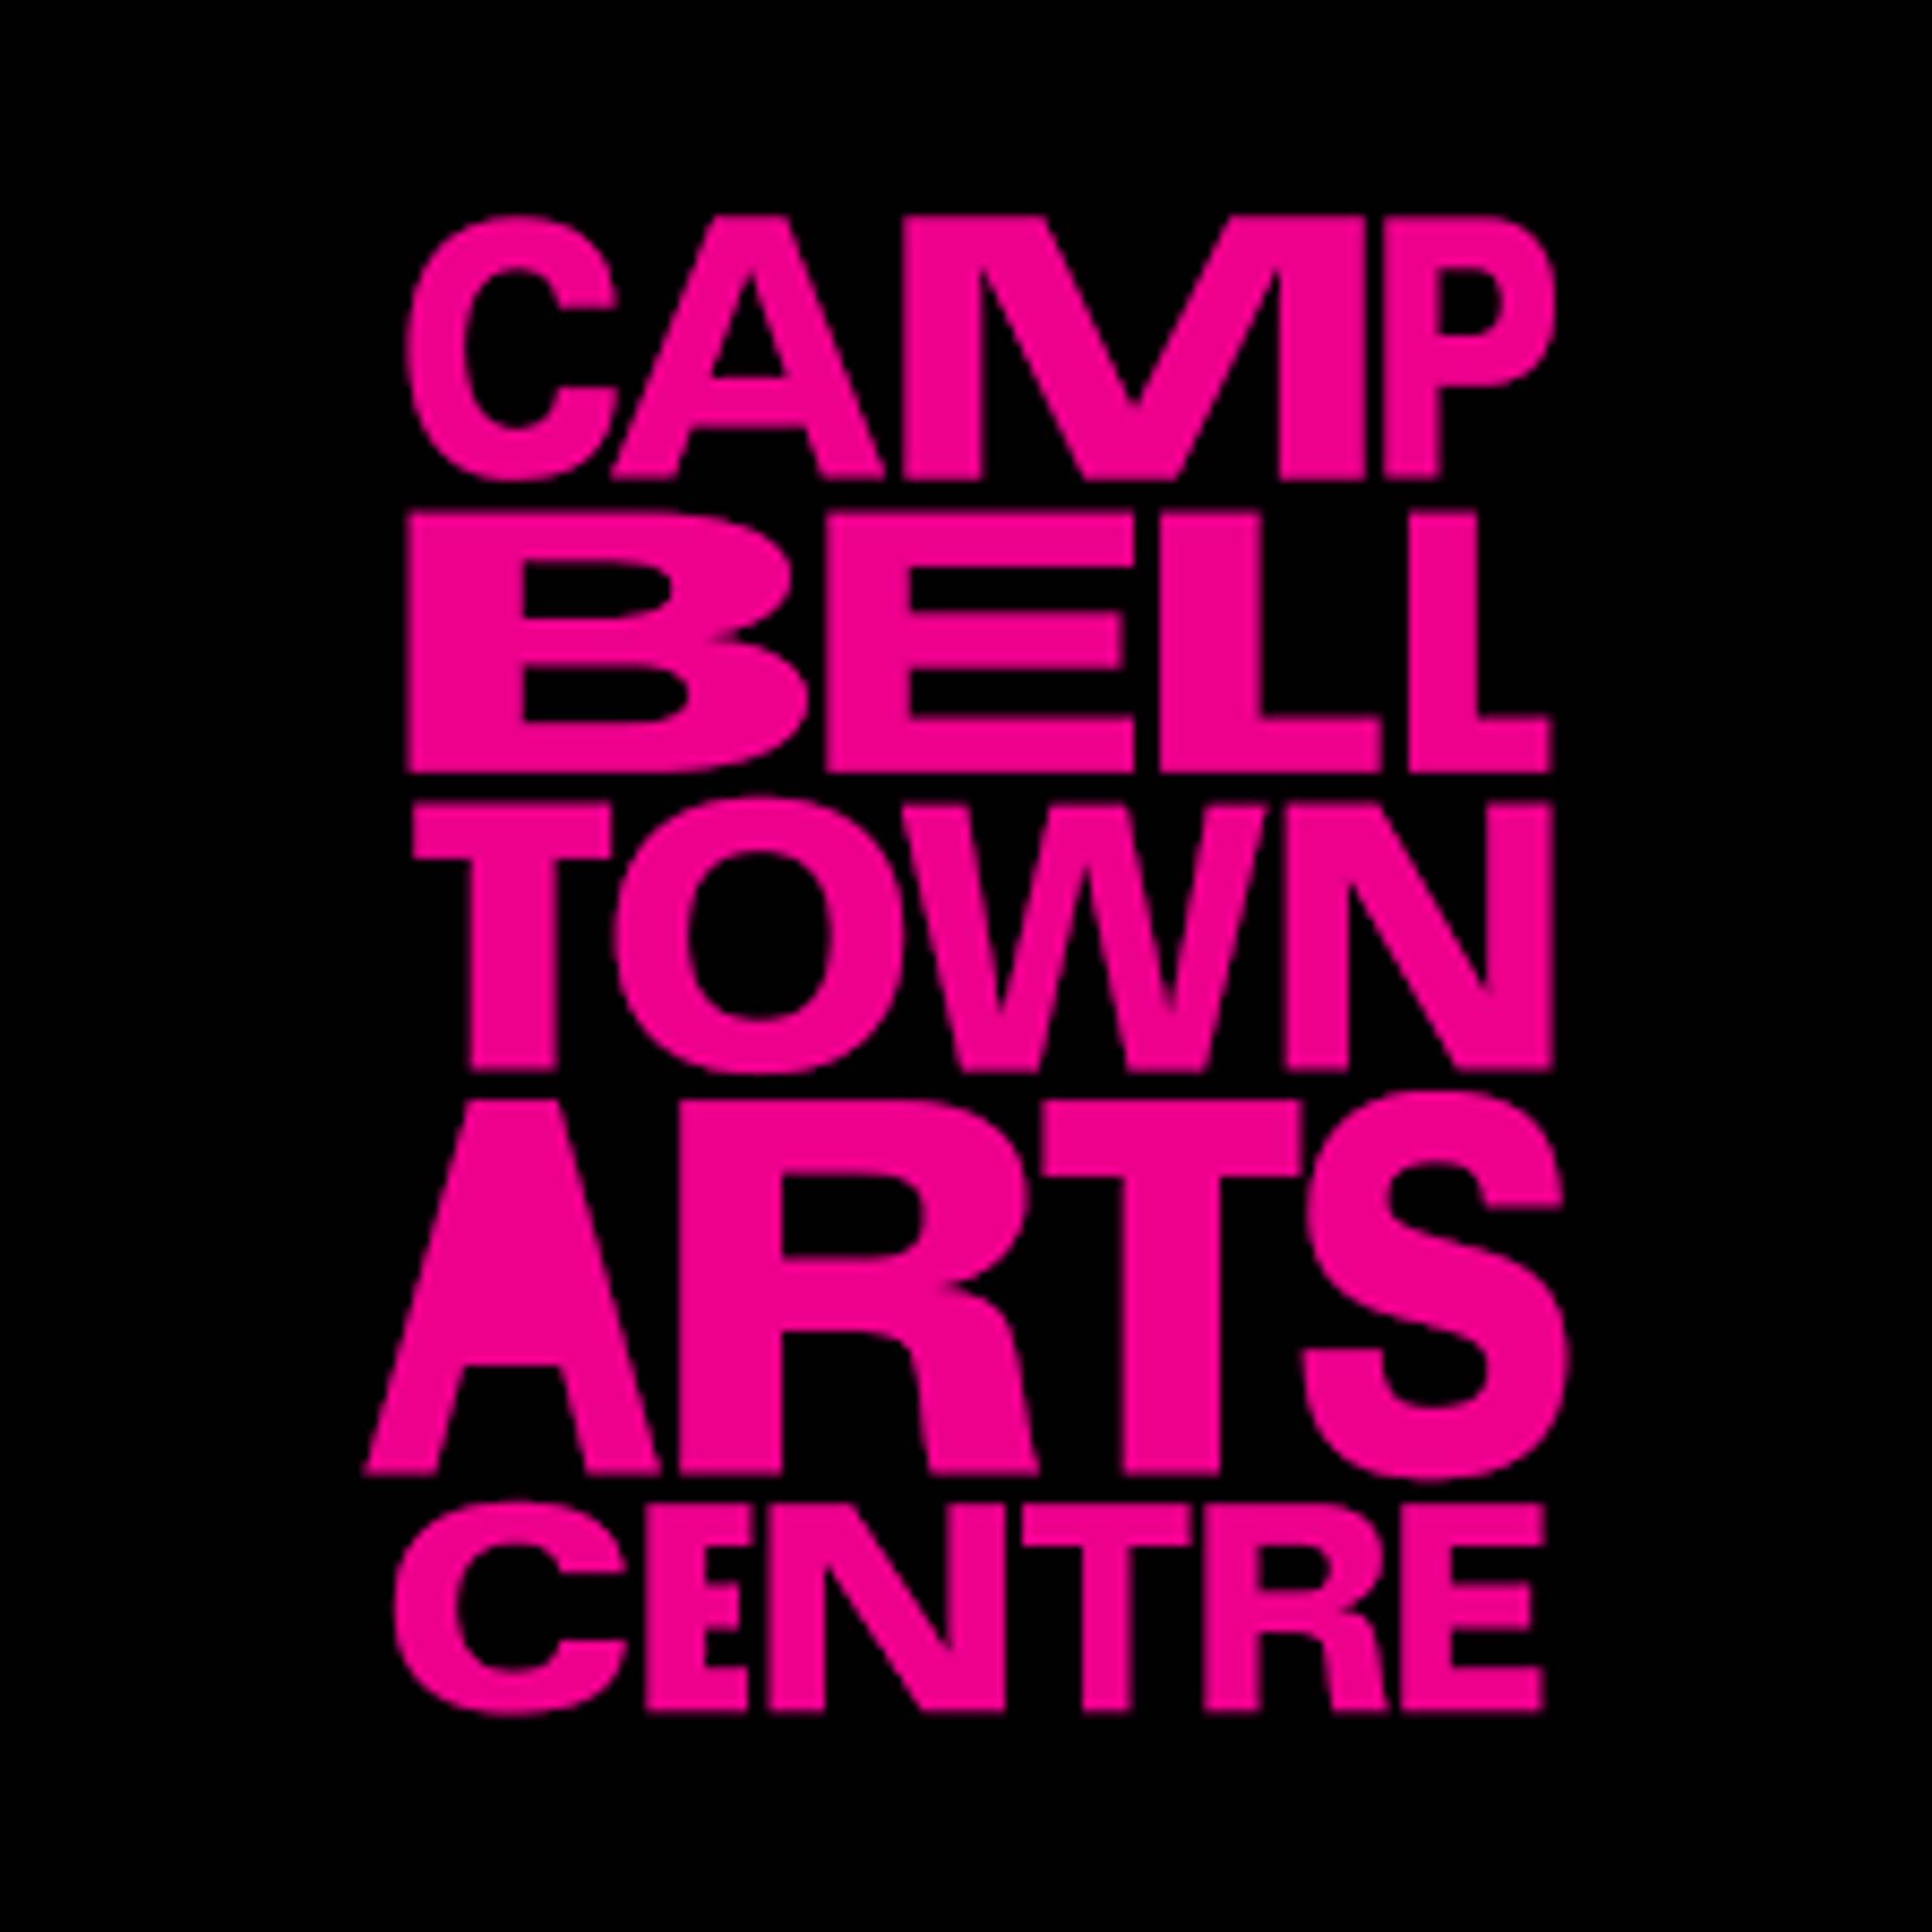 &mdash;Campbelltown Arts Centre